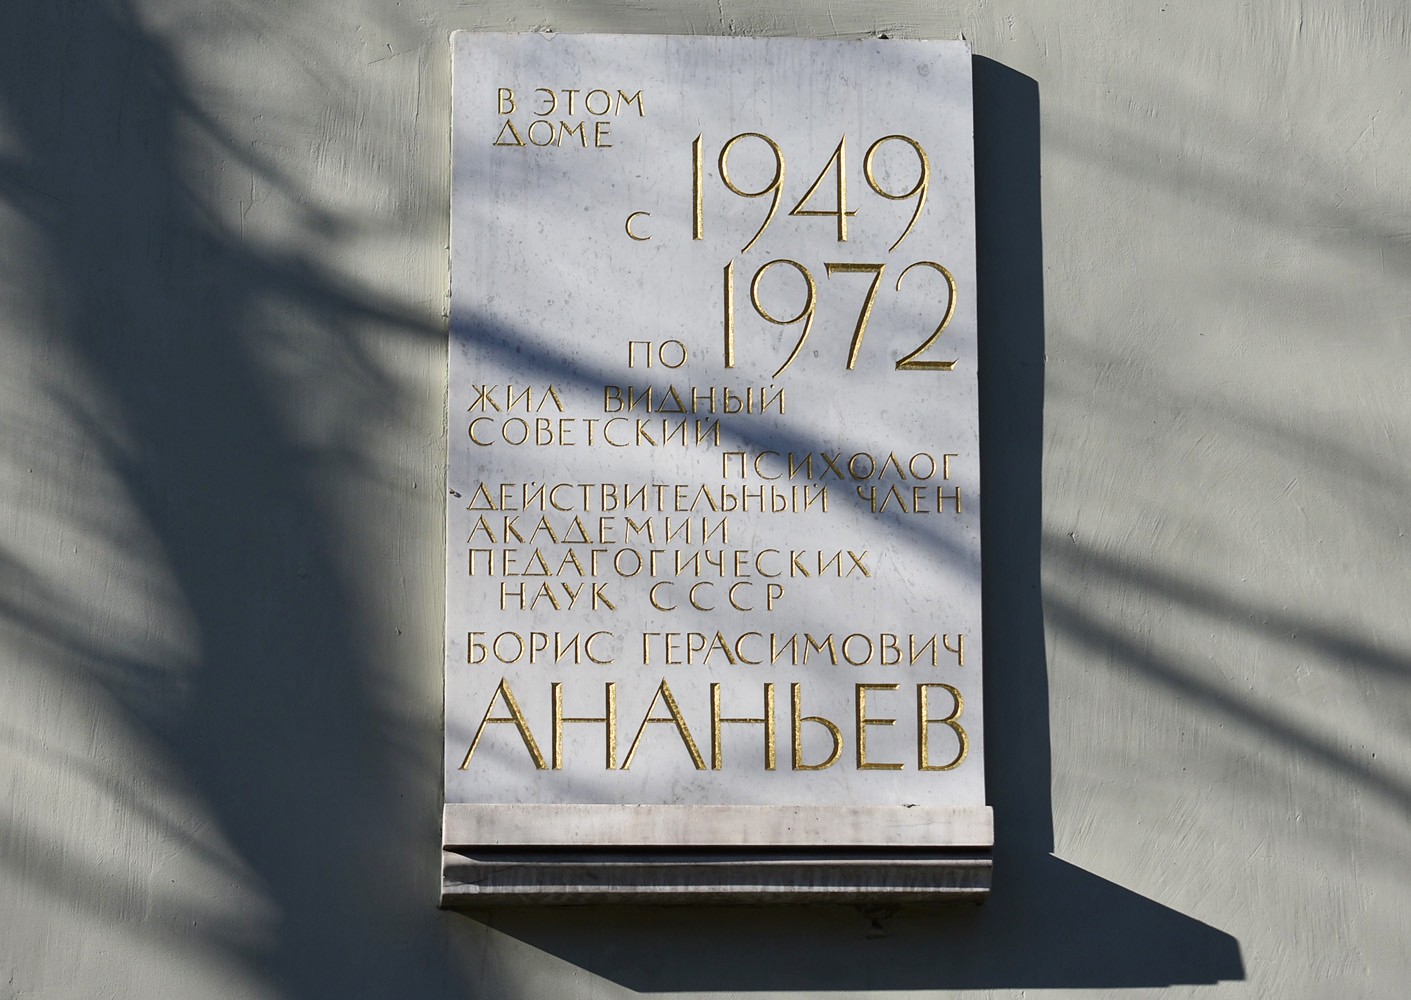 Saint Petersburg, Дибуновская улица, 31. Saint Petersburg — Memorial plaques